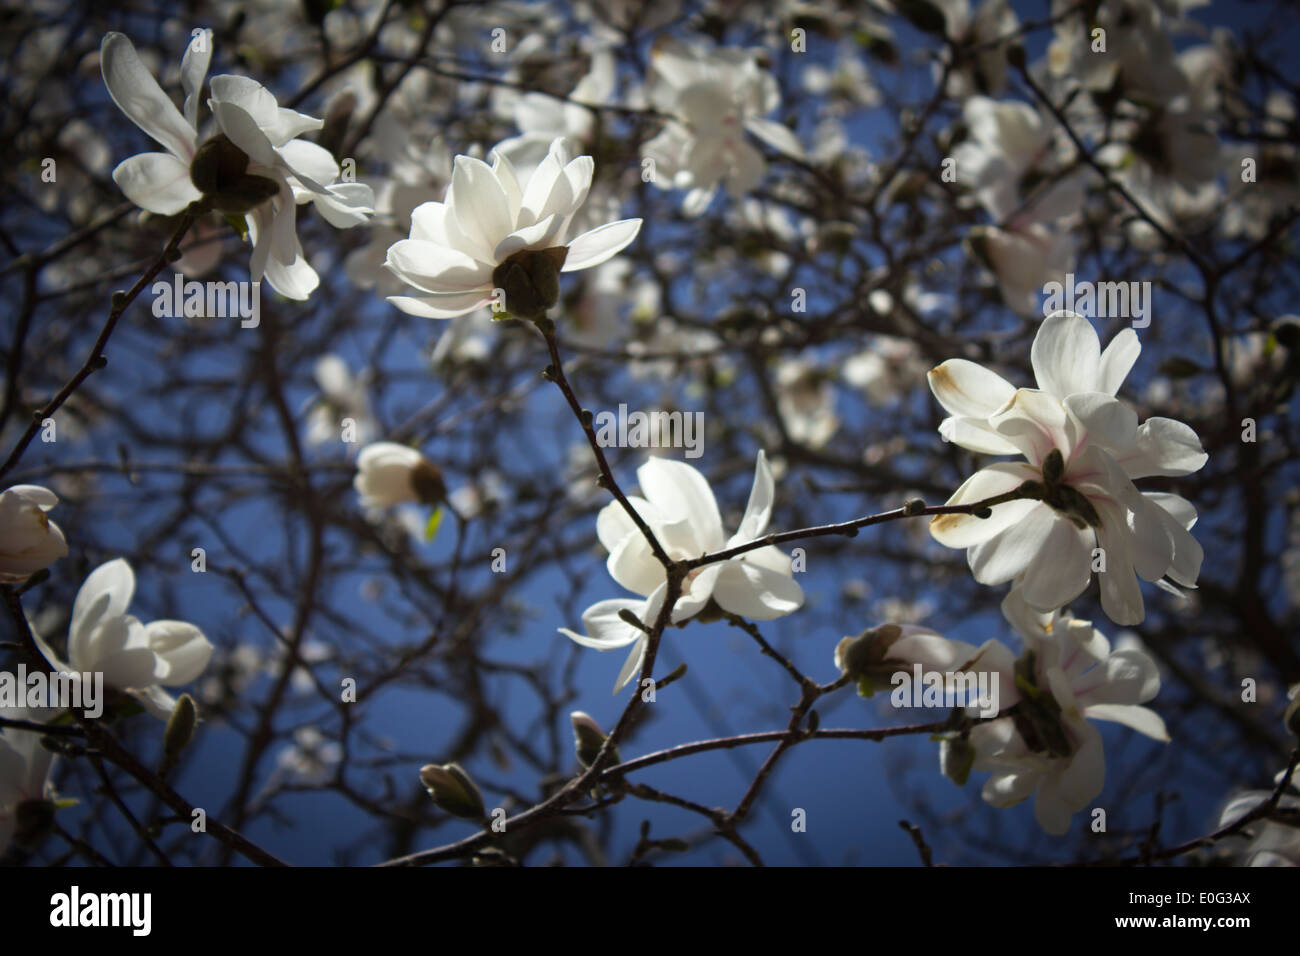 White Magnolia Tree Blossoms Against Blue Sky Stock Photo